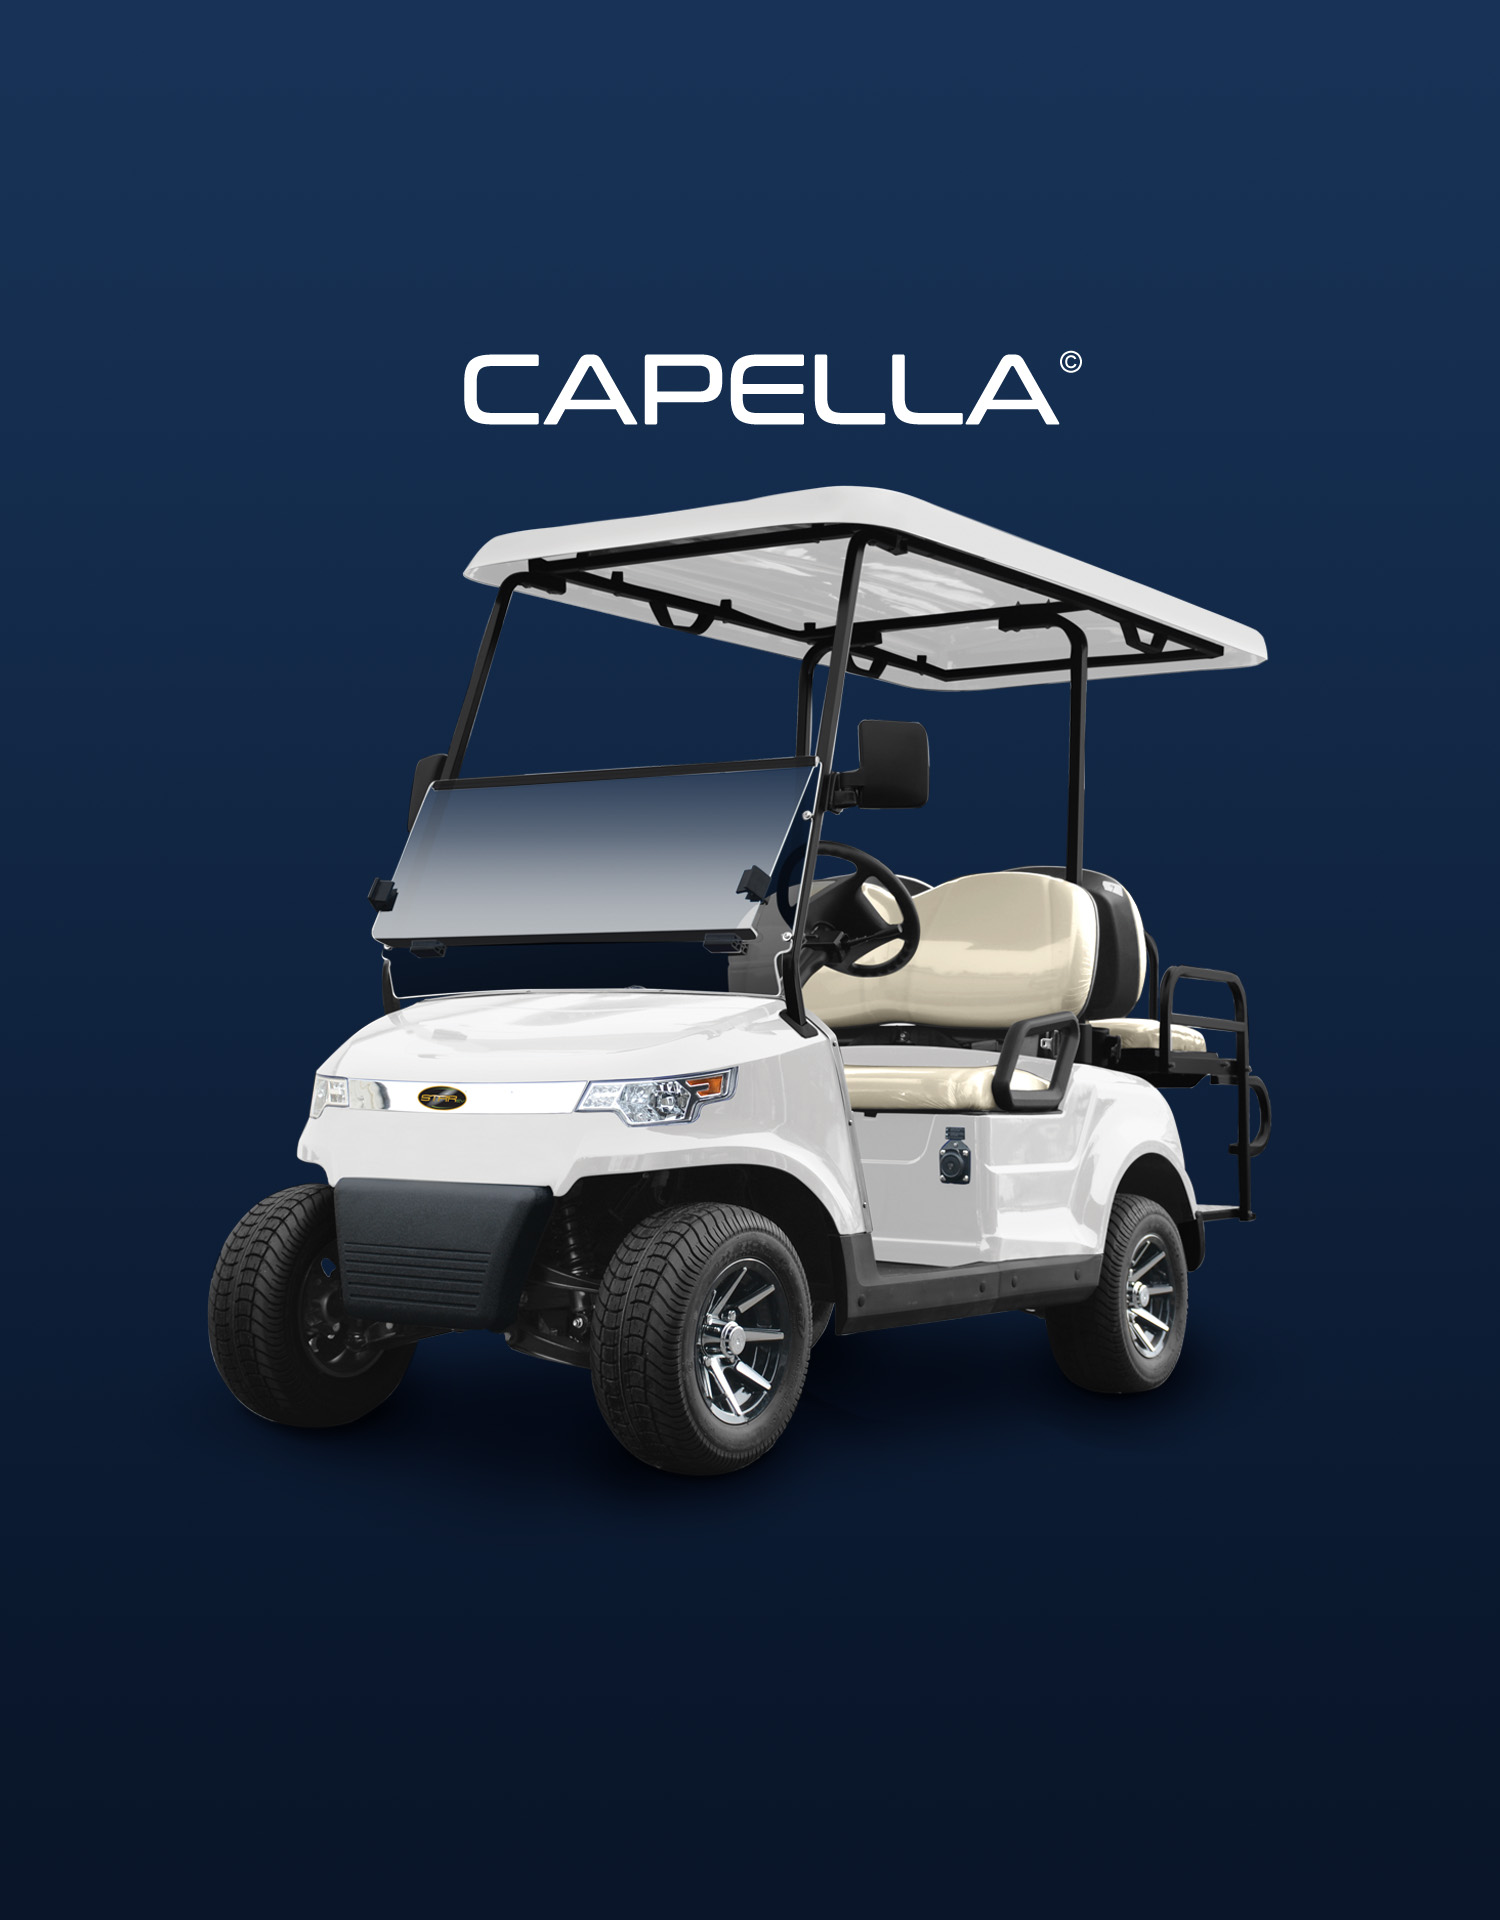 STAR EV Golf Cart GORILLA Floor Mat (Fits All Star EV Models)